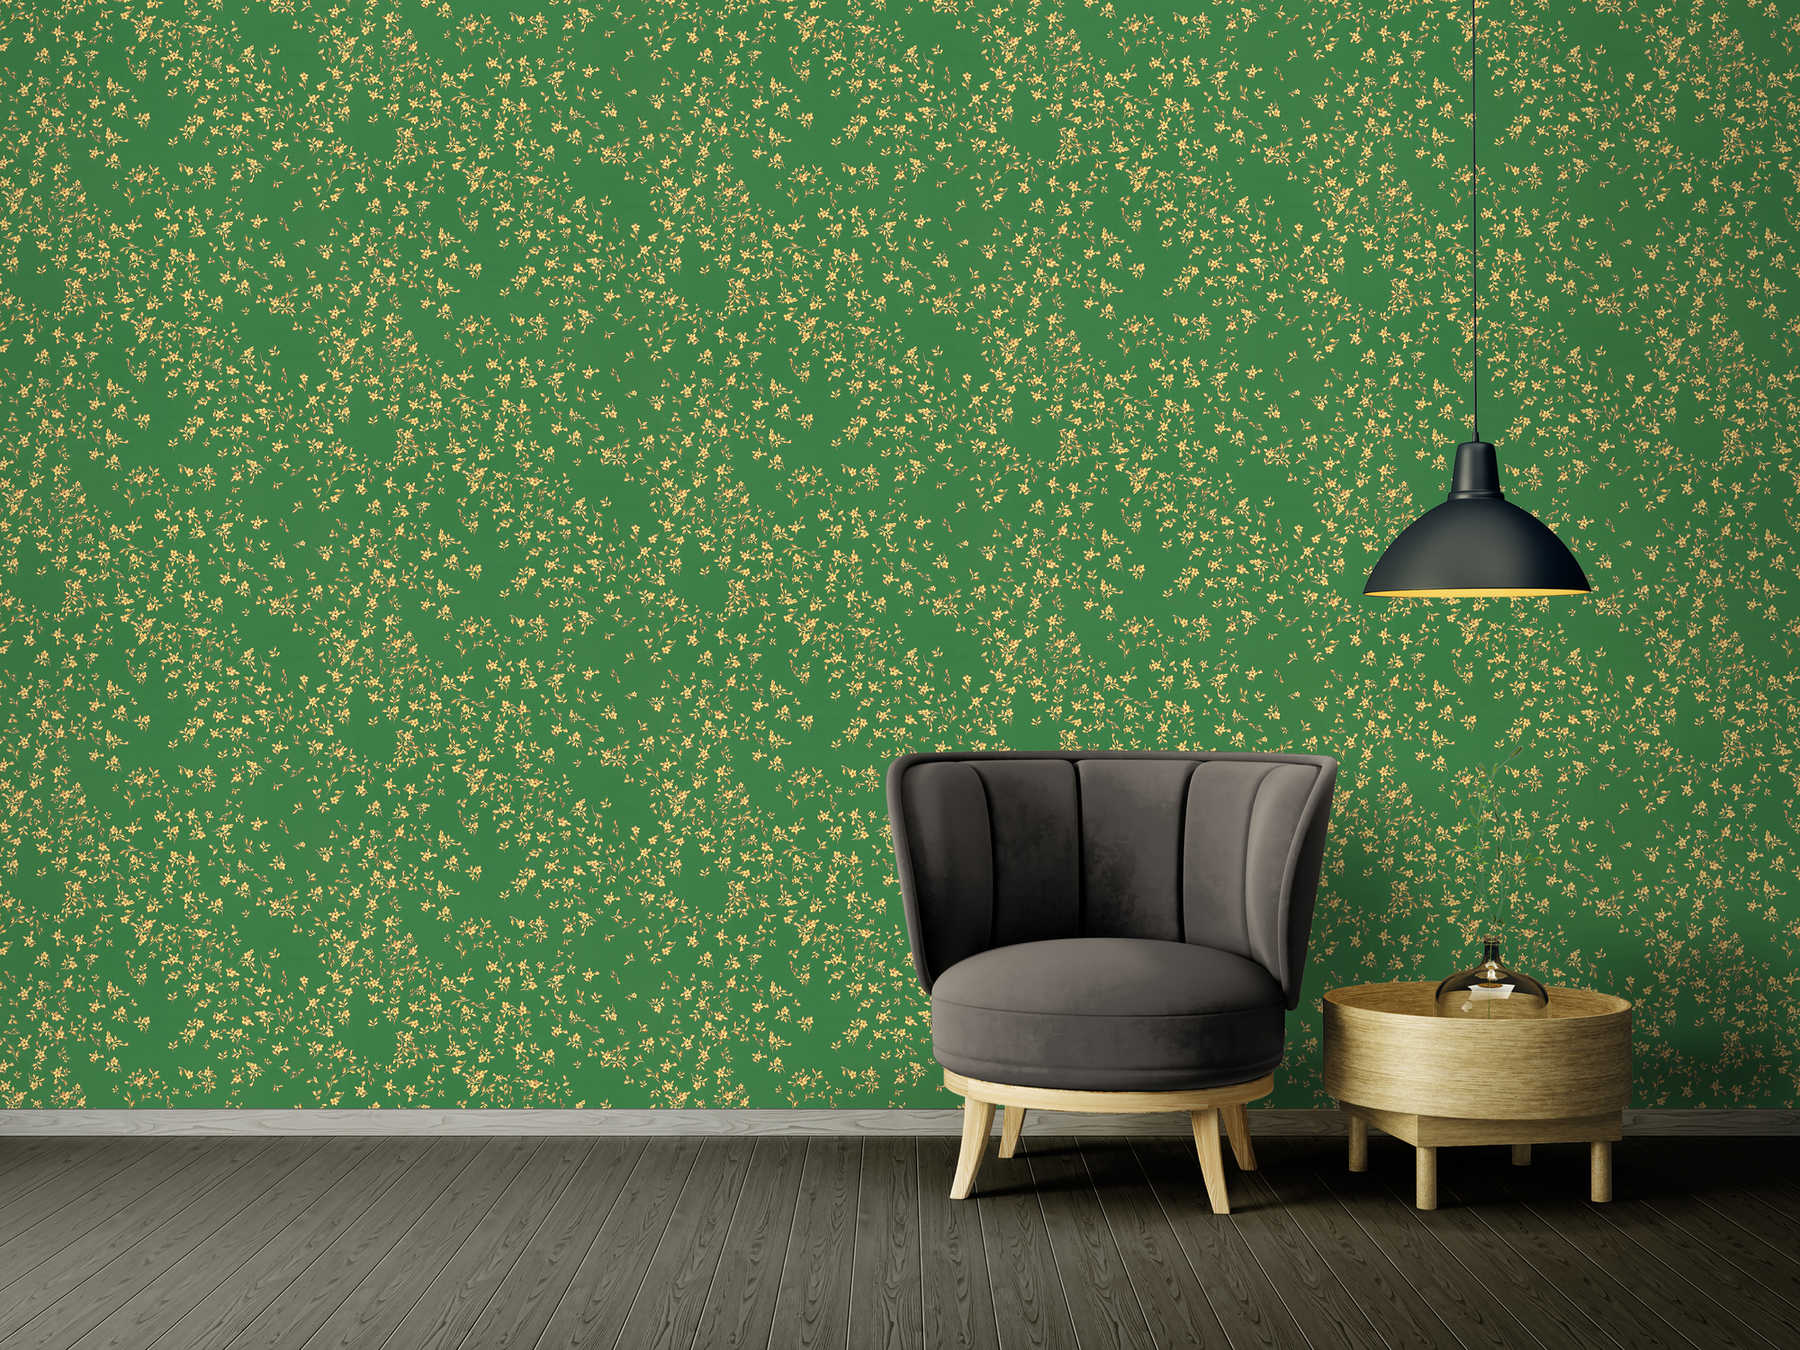             Green VERSACE wallpaper with golden flowers - green, gold, yellow
        